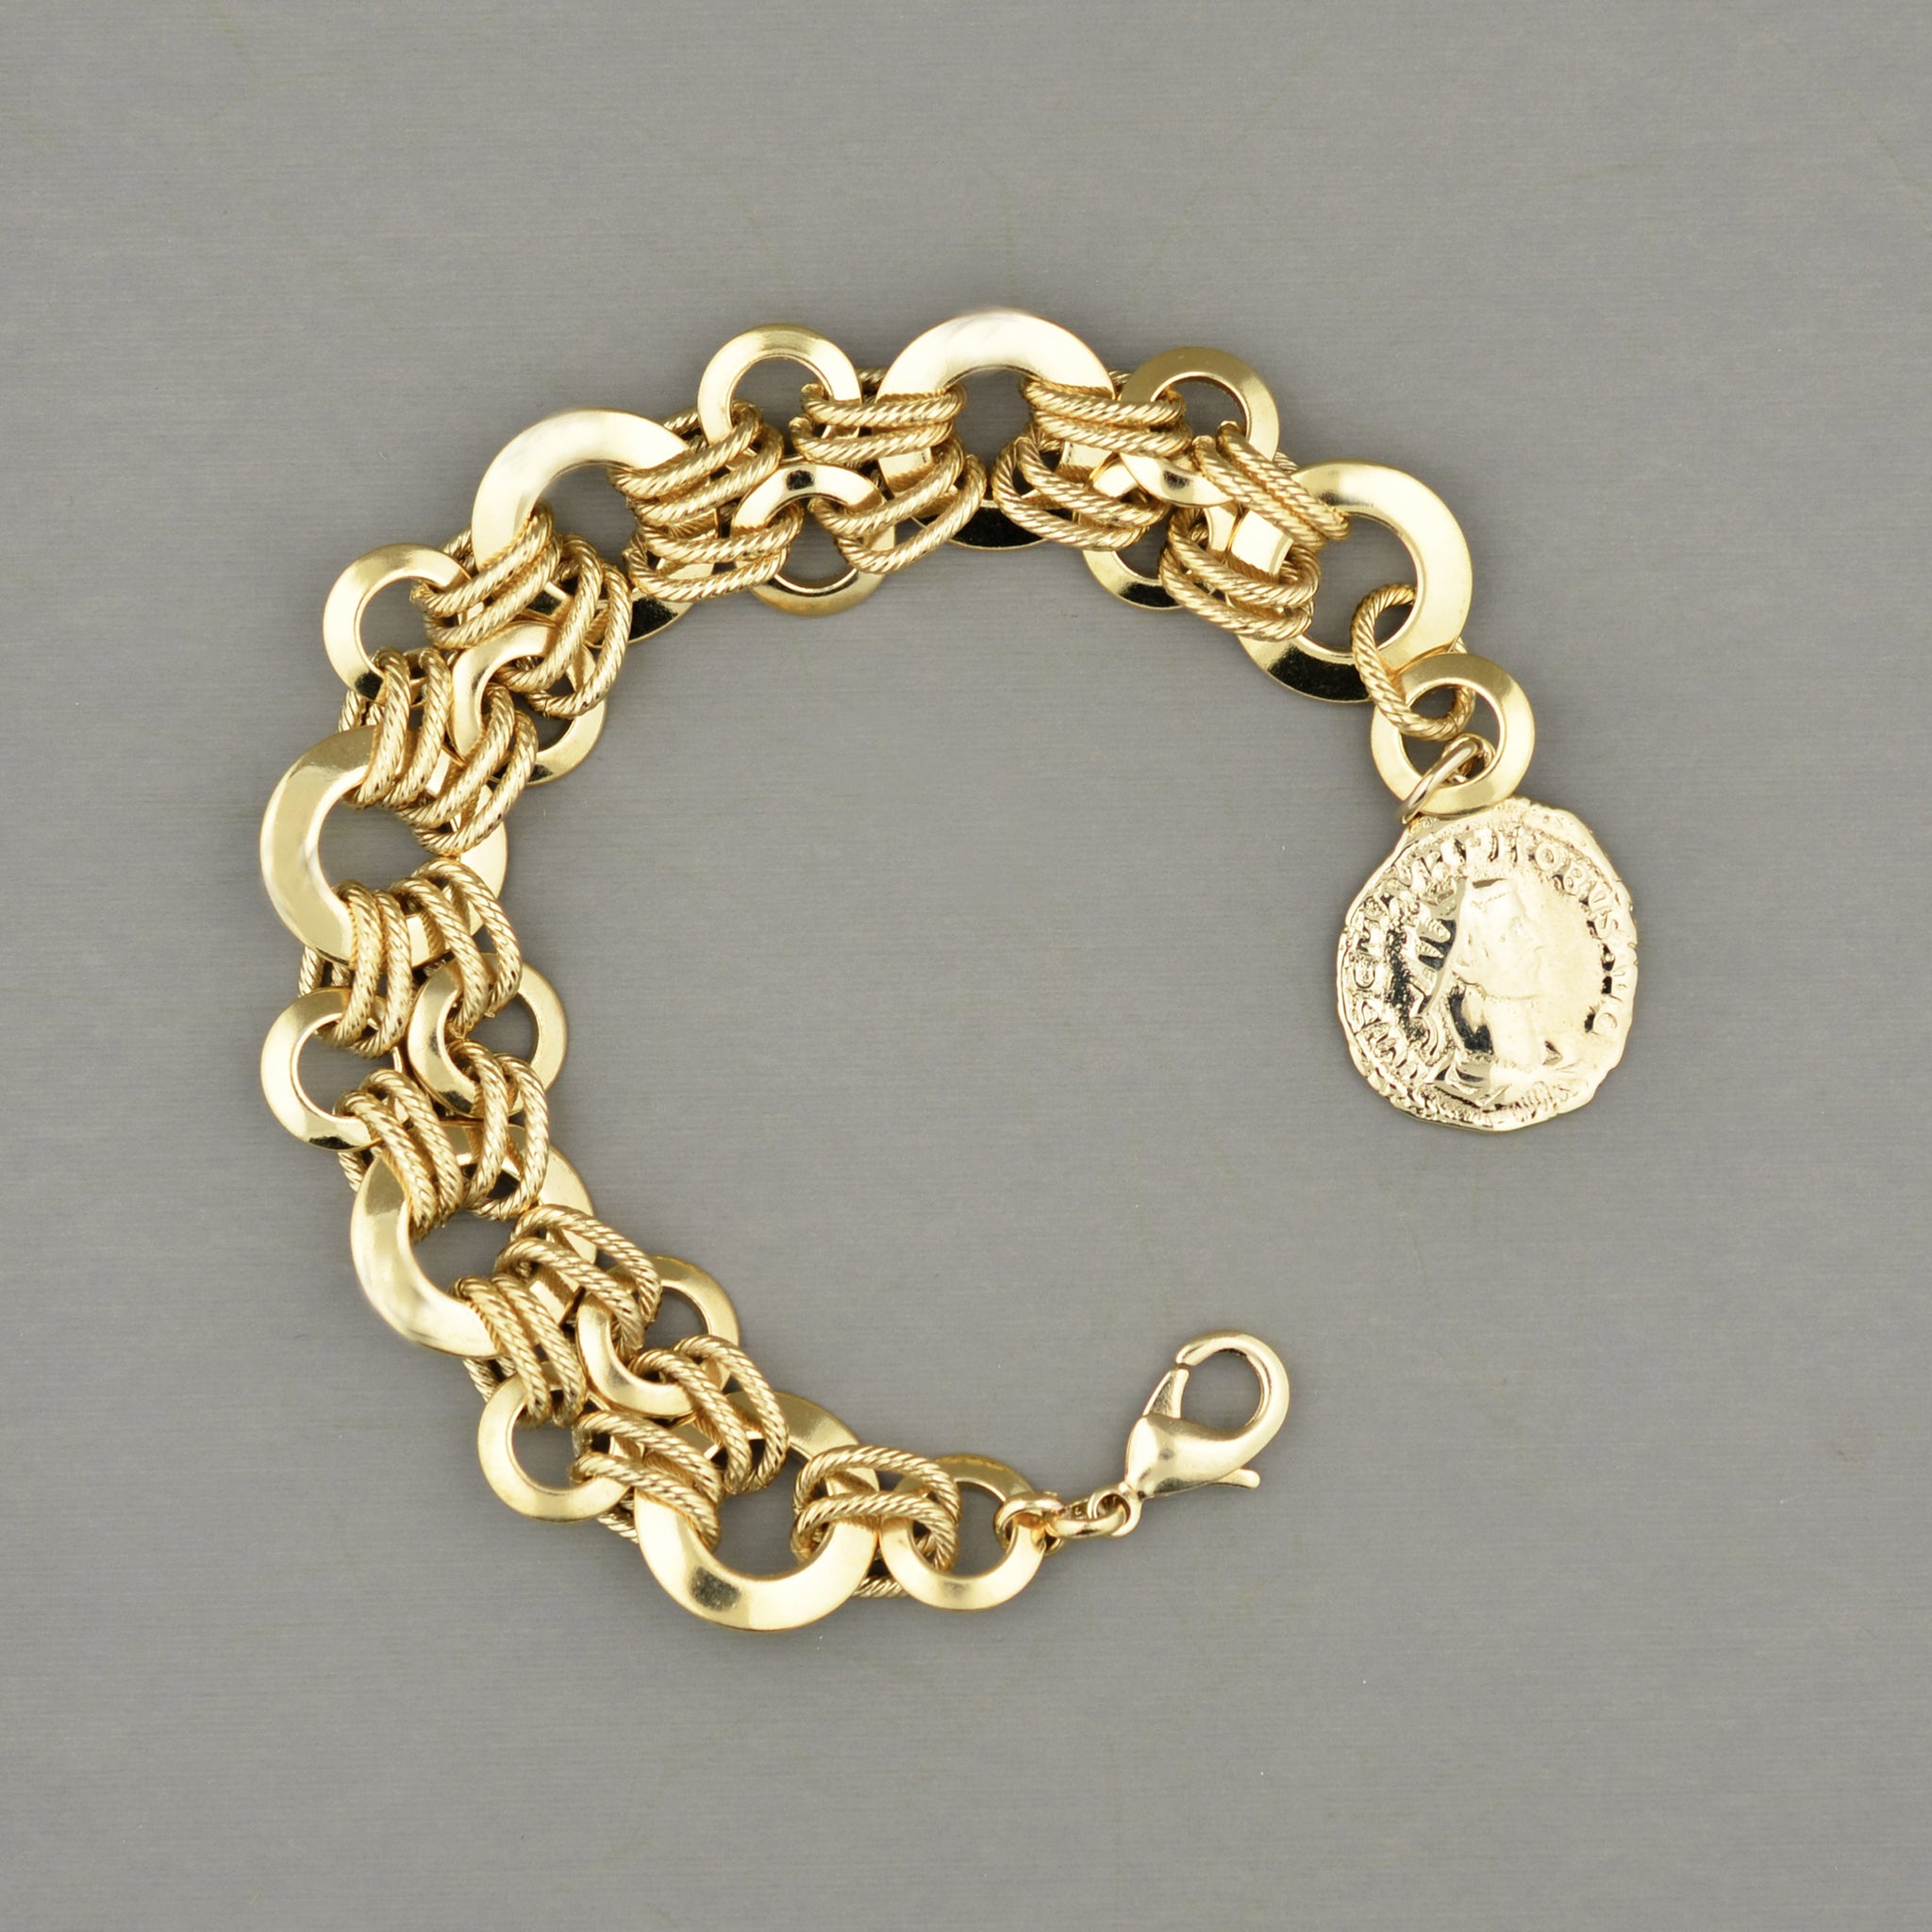 Mermaid fish chunky charm bracelet with genuine world coins, angelfish –  elemintalshop